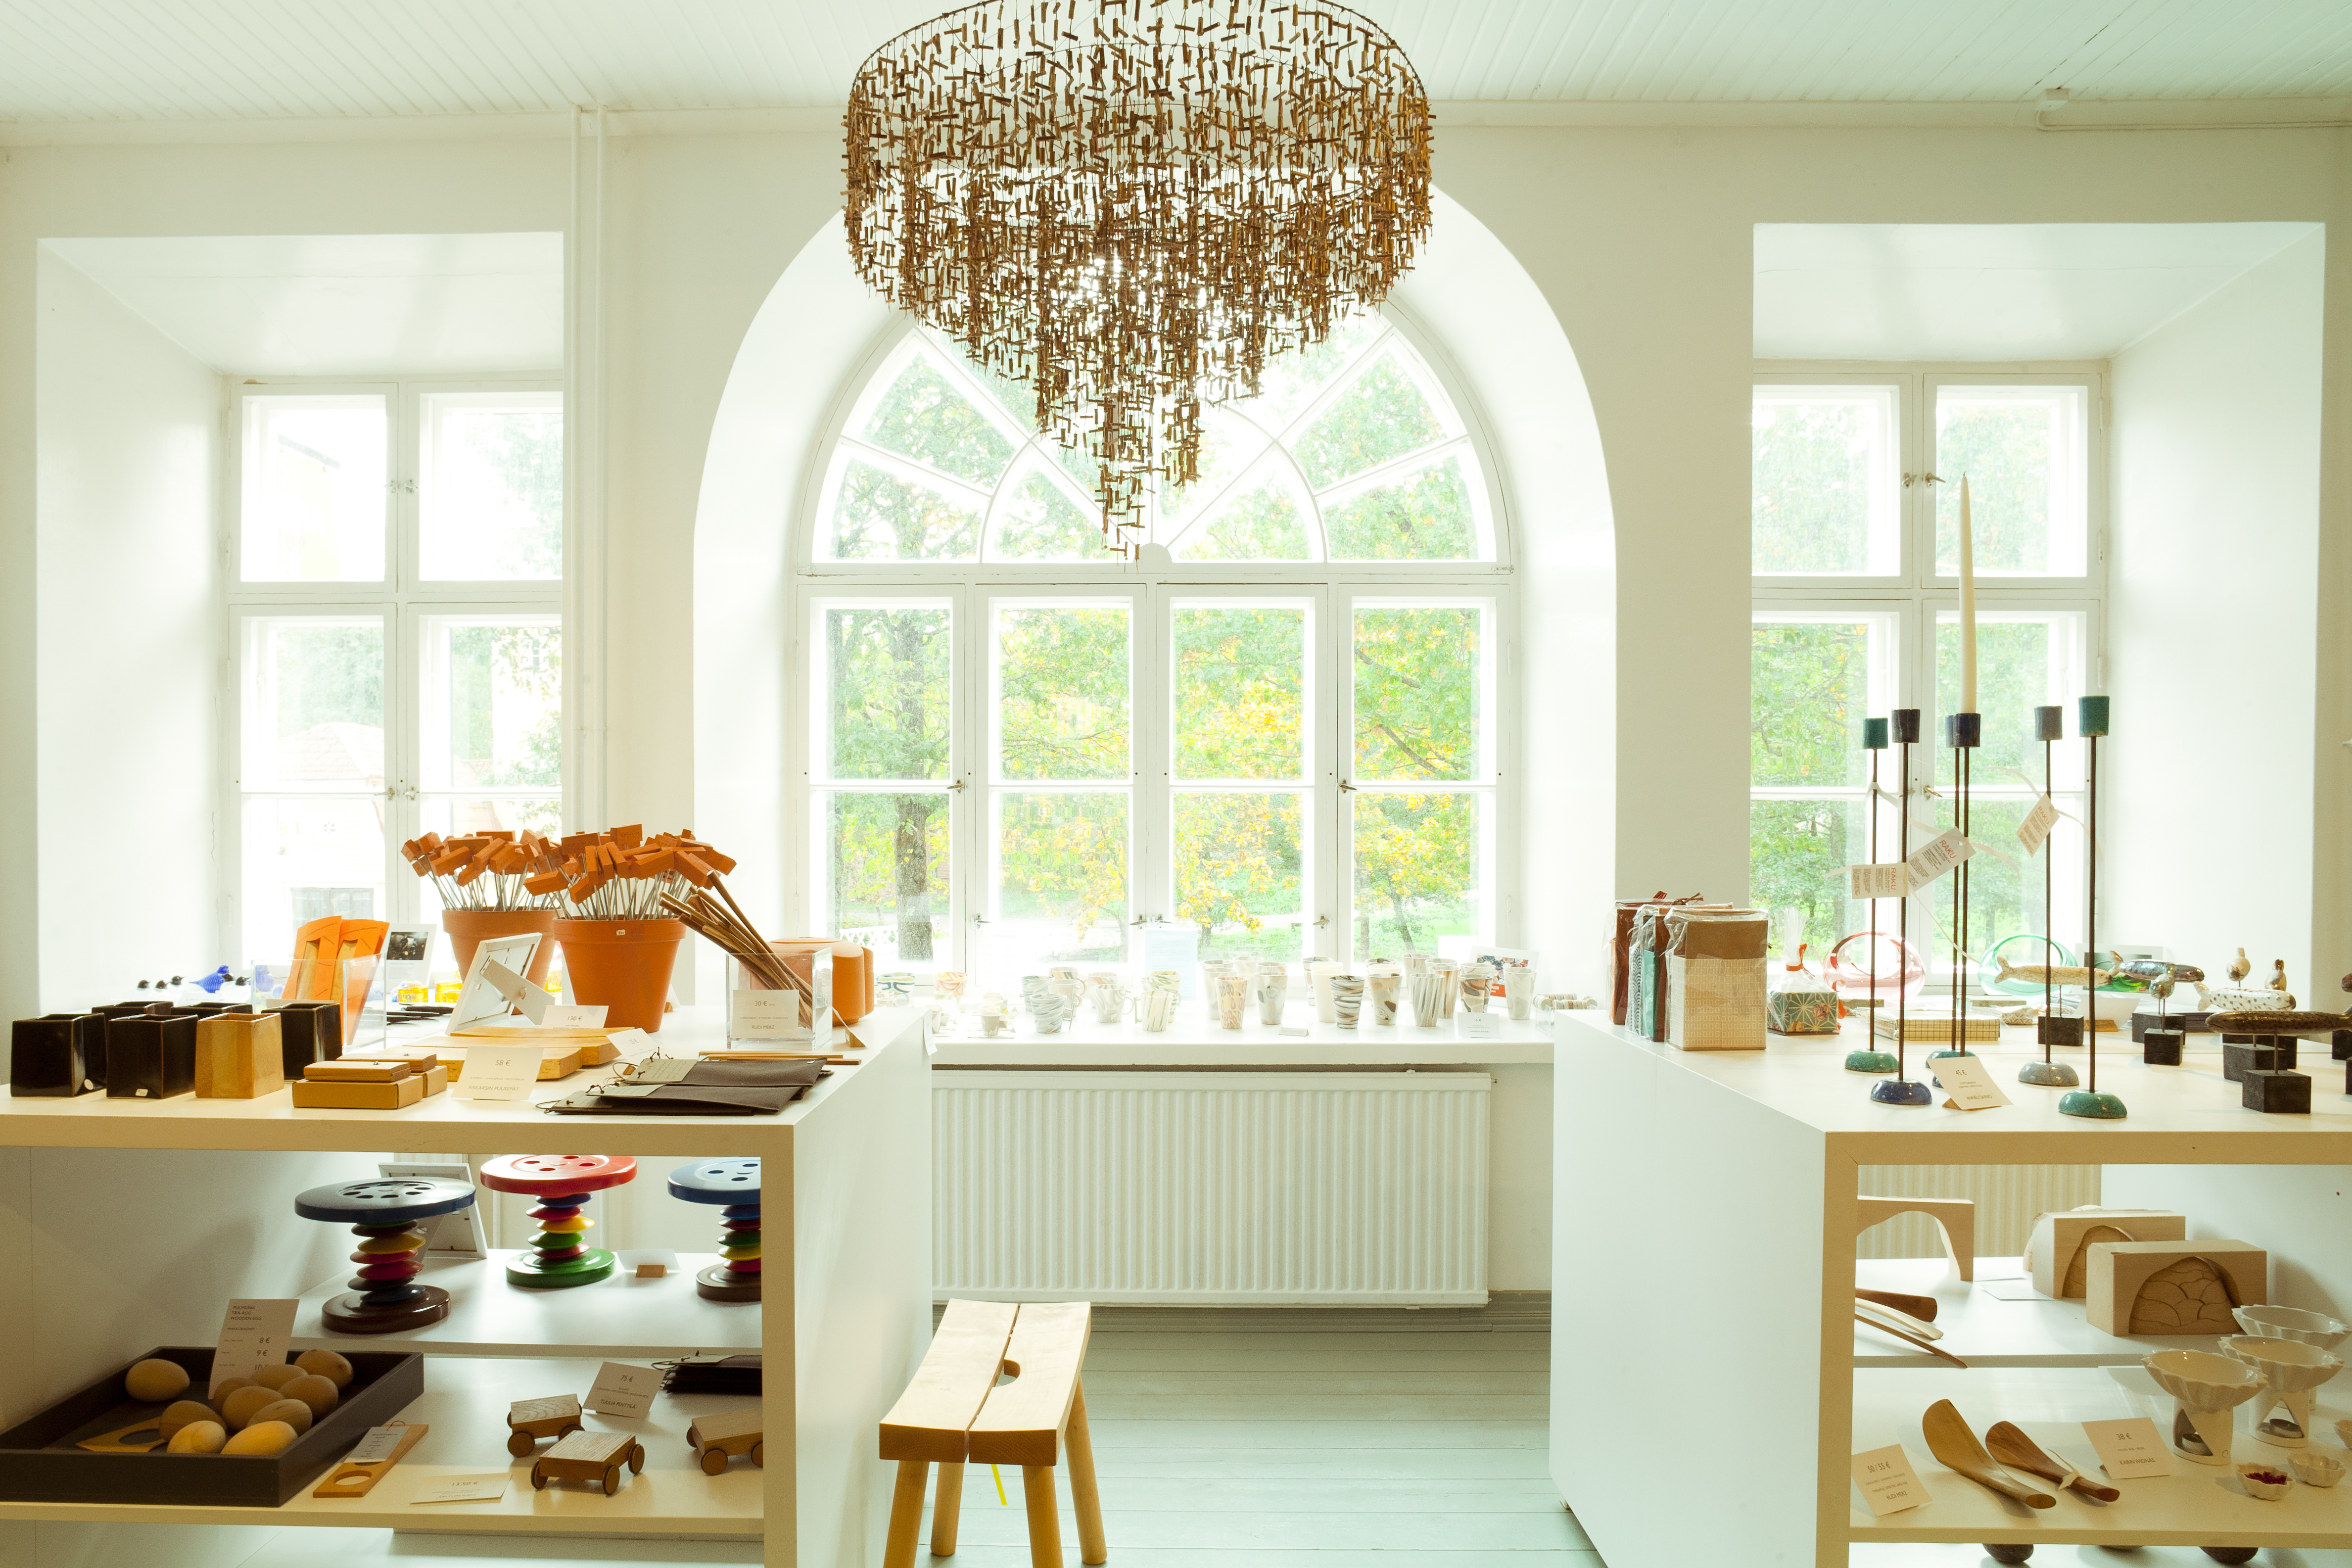 The interiors of a Fiskars village crafts shops